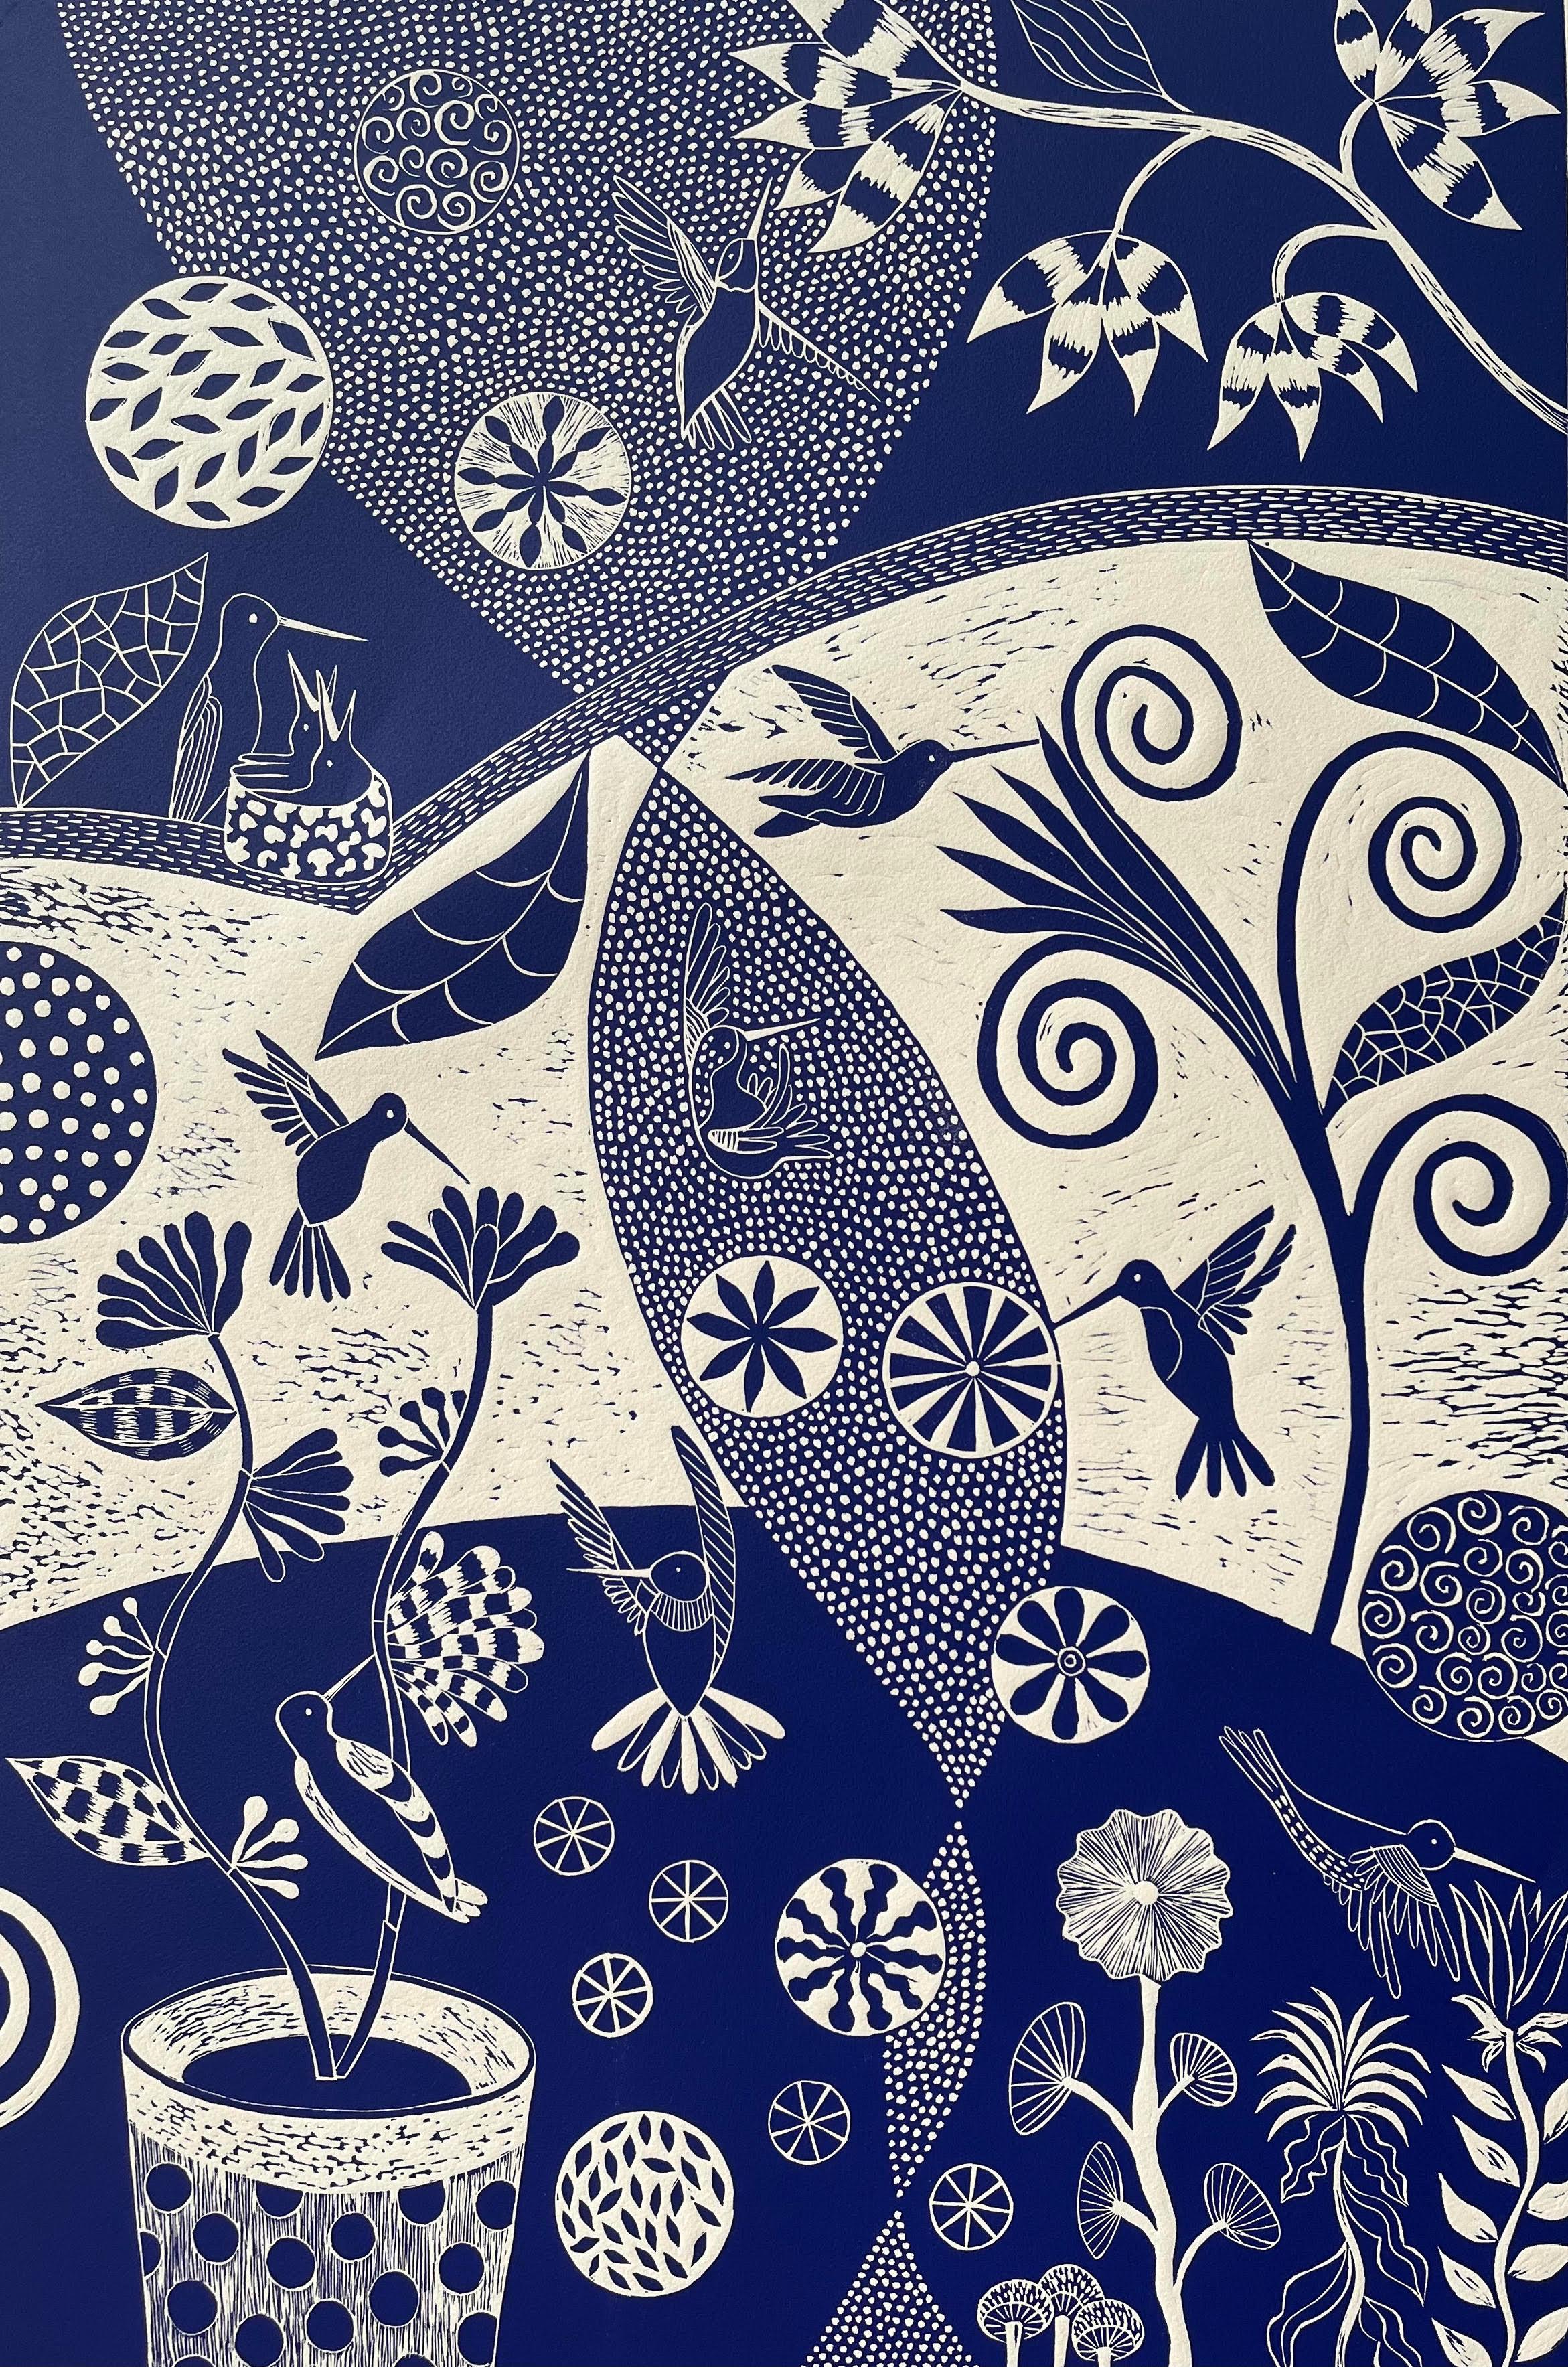 Lisa Houck Animal Print - "Humming and Harmonizing"  Folk Art inspired hummingbird print, blue / off white